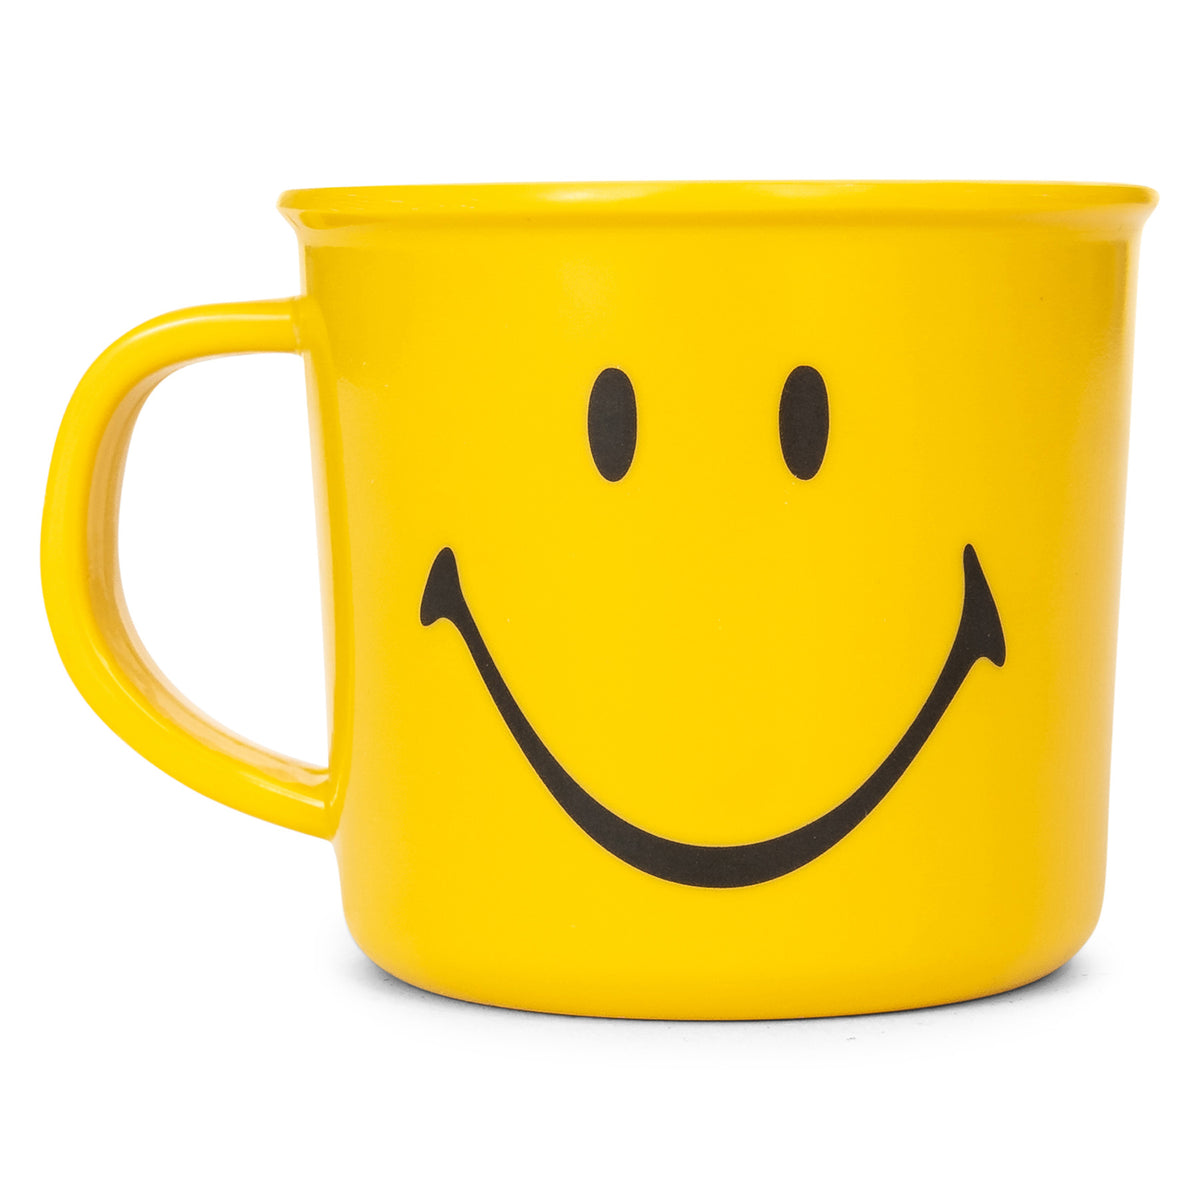 Load image into Gallery viewer, MARKET Yellow 4 Smiley Mug Set
